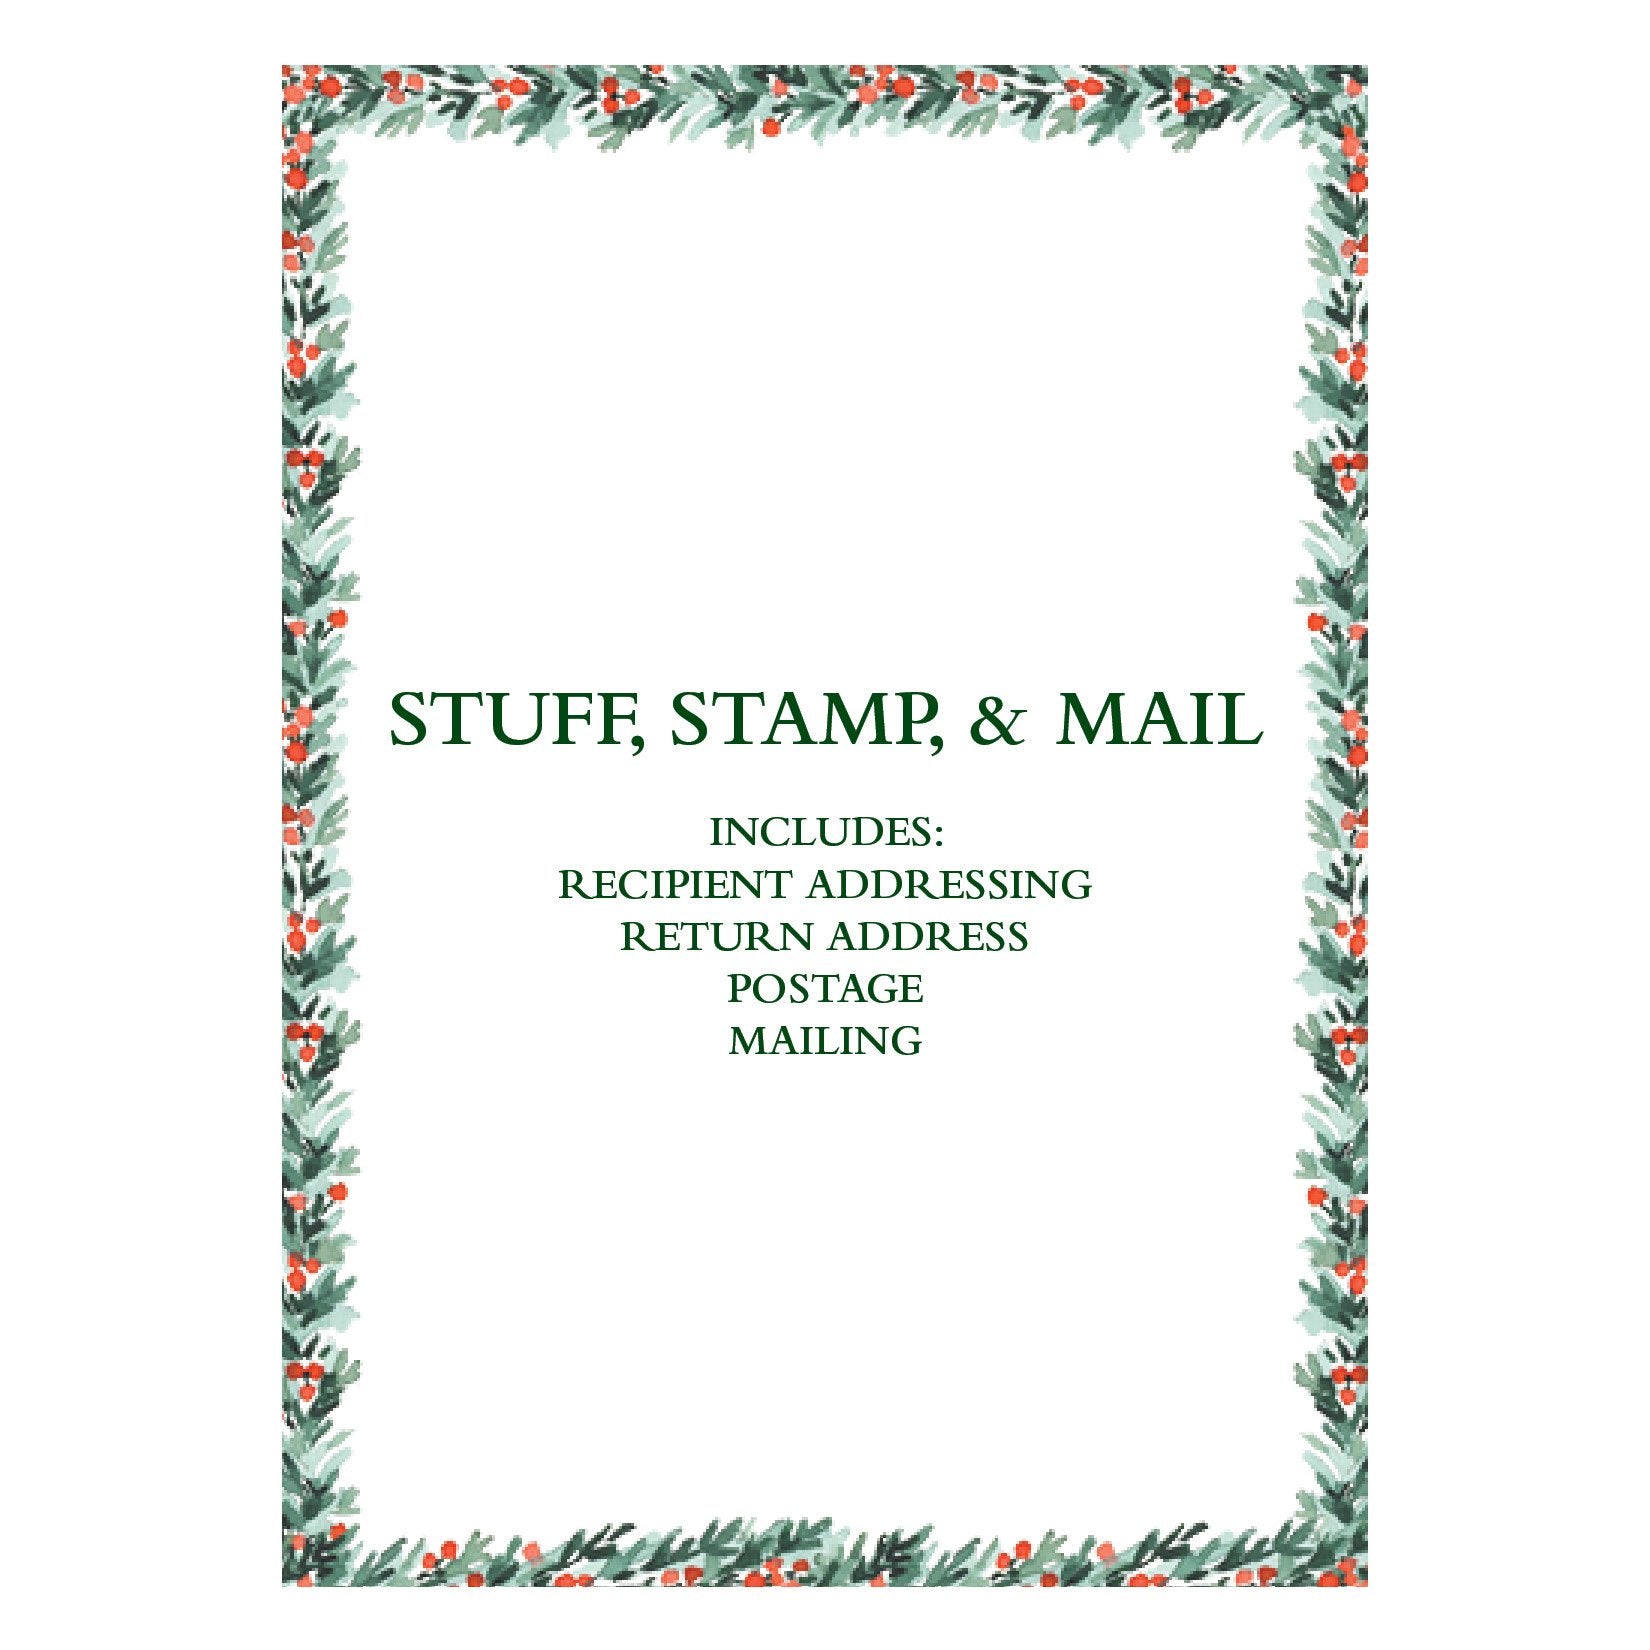 Address, Stuff, Stamp, & Mail